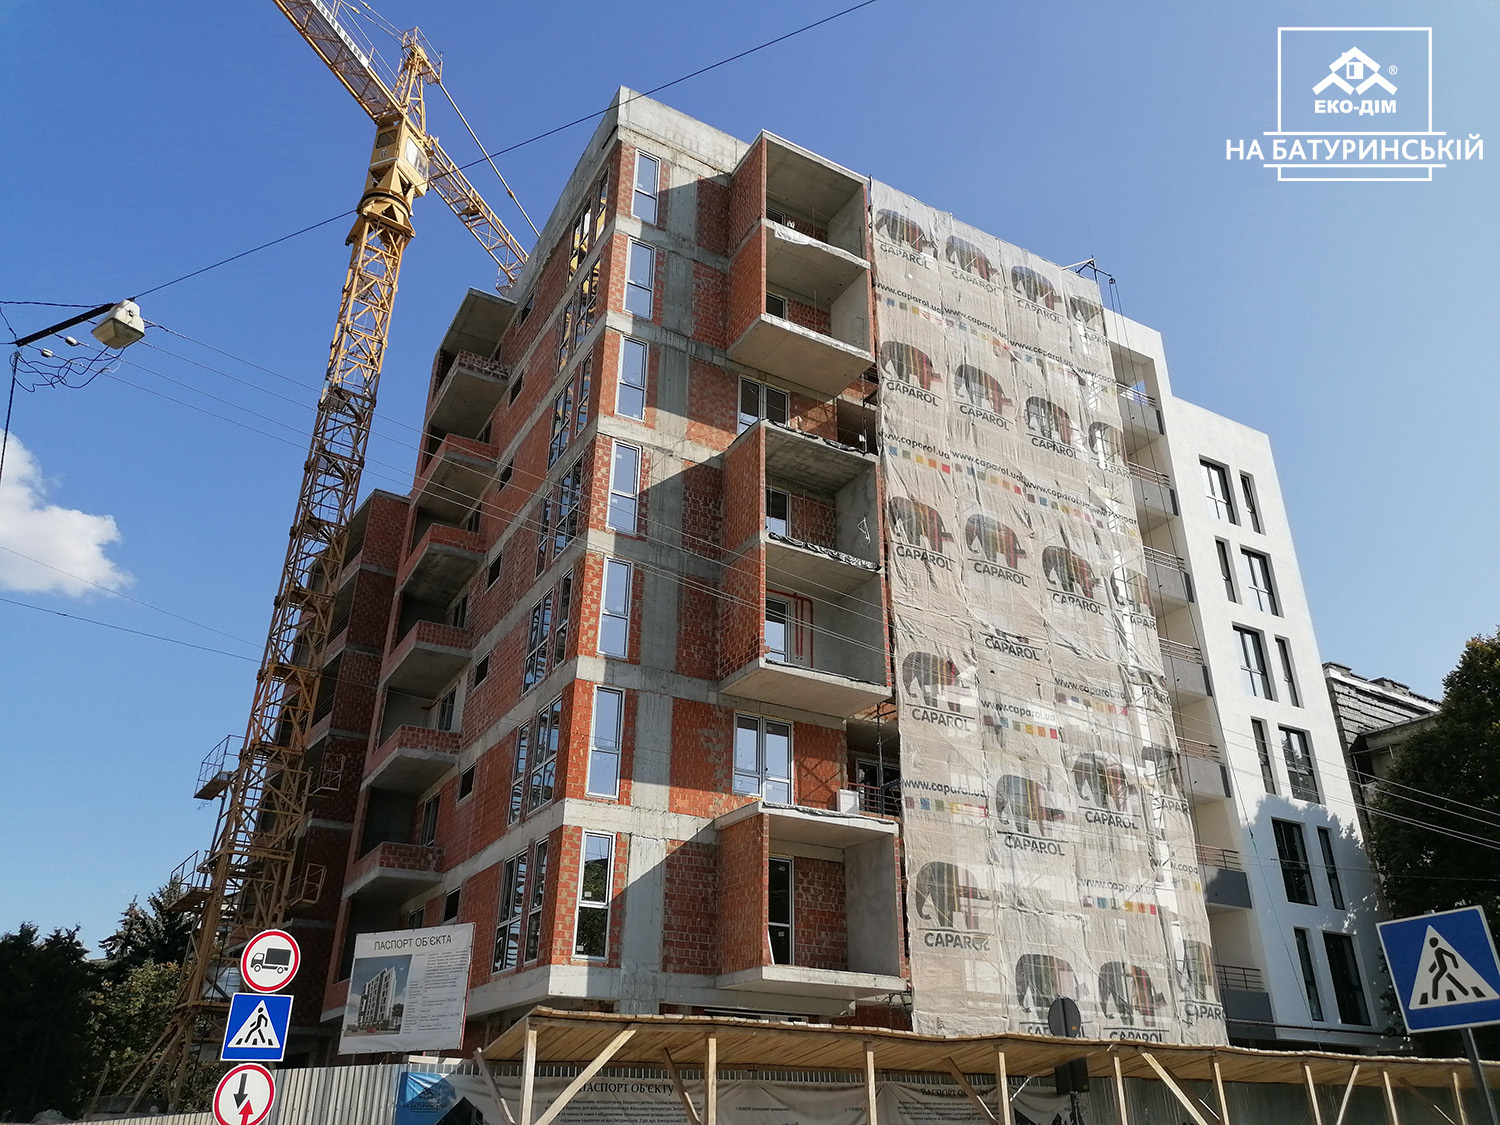 Ход строительства ЖК Эко-дом на Батуринской, сен, 2020 год